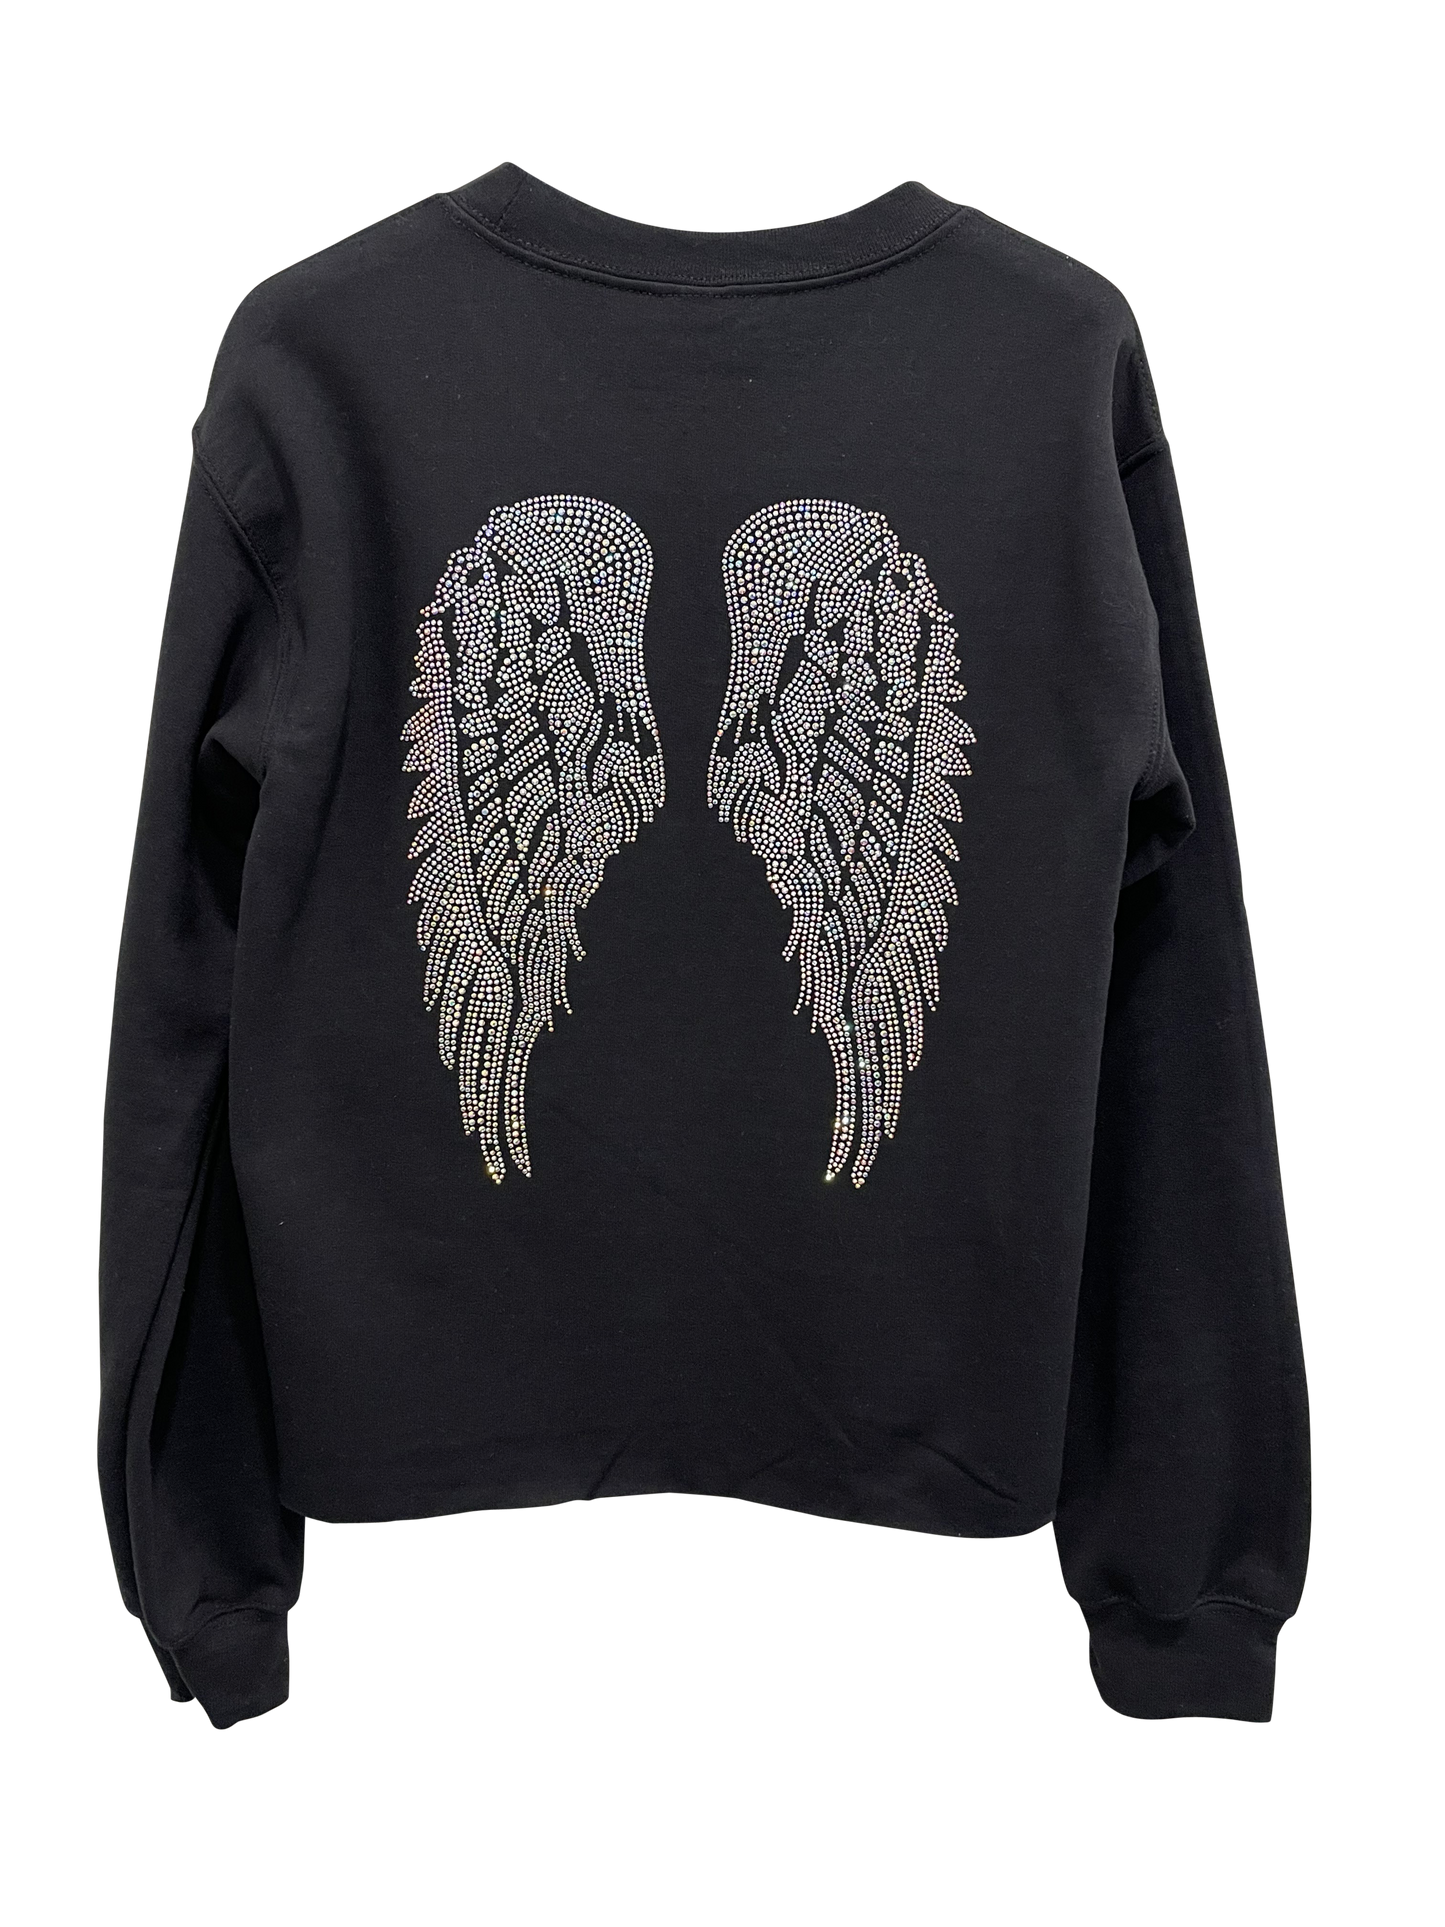 Sweatshirt, Crewneck Black, Iridescent Wings on back